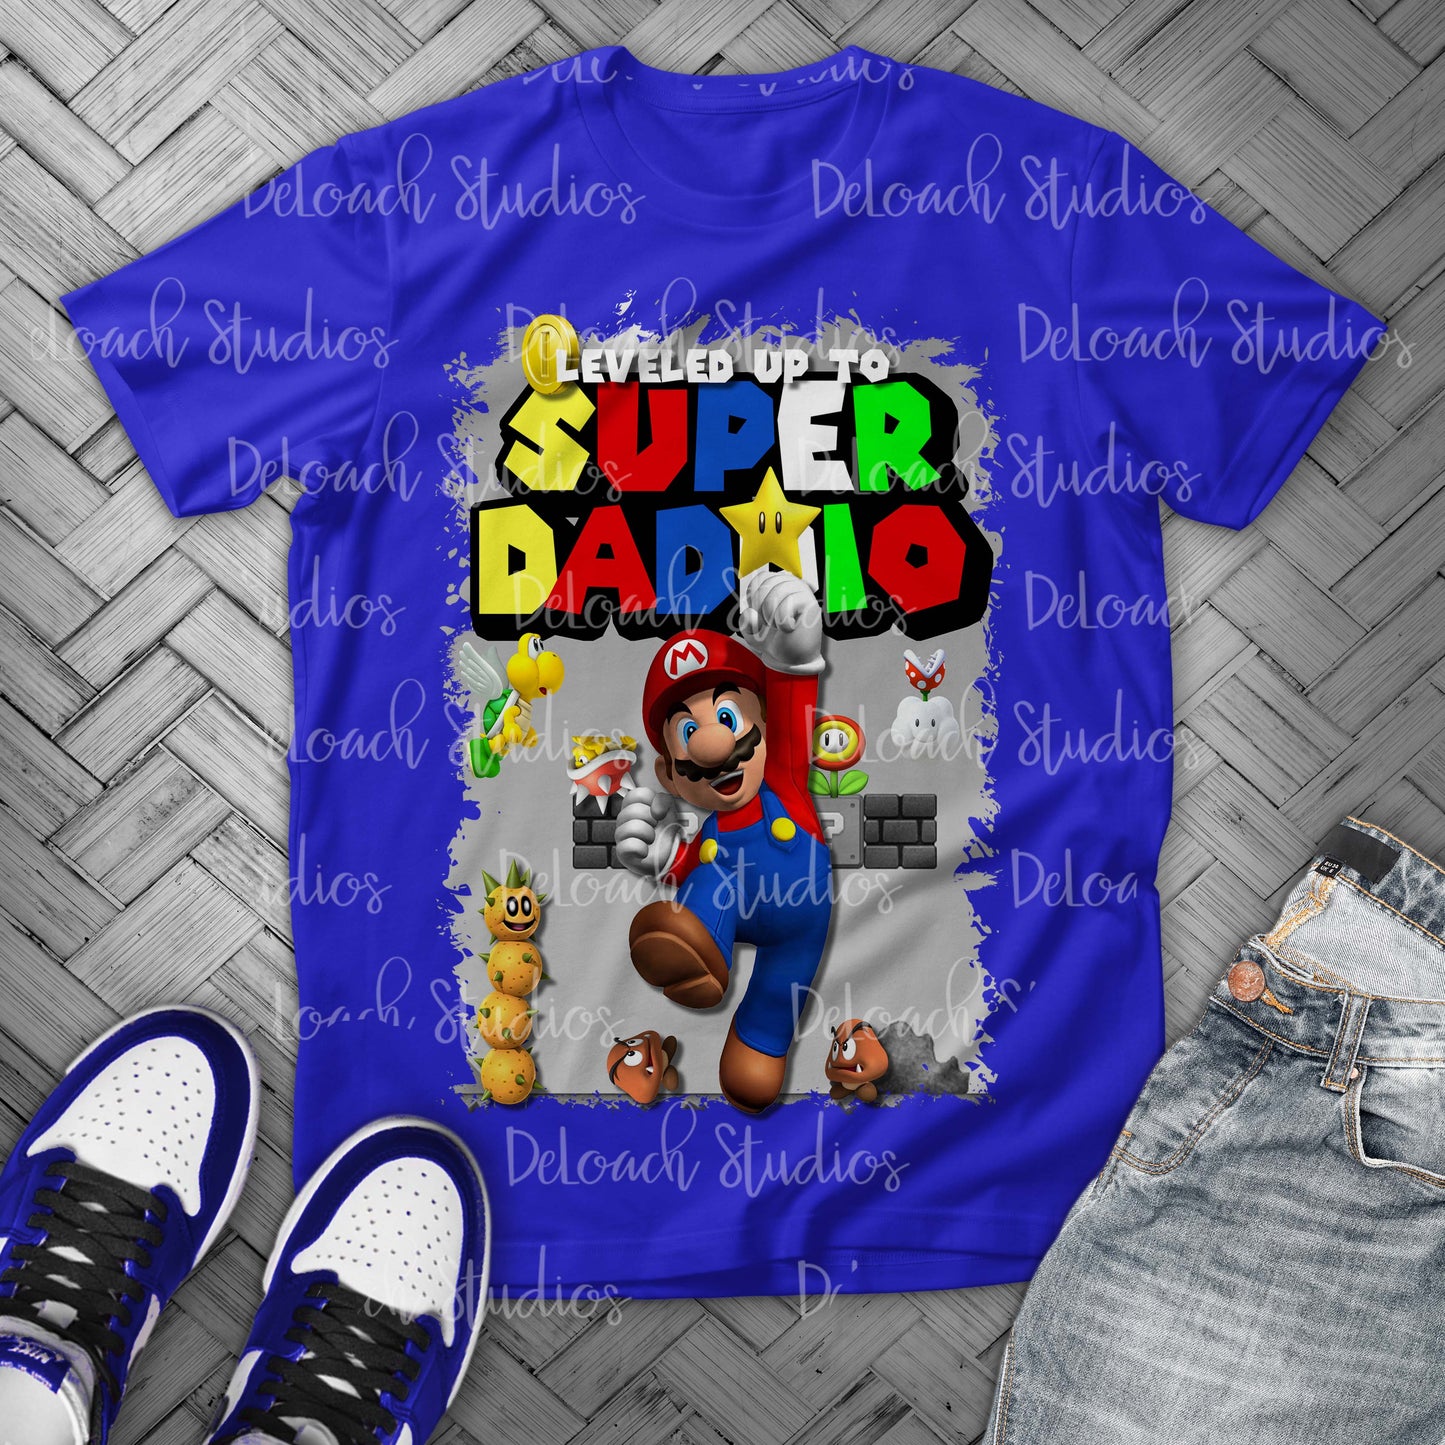 Super Daddio (colors)